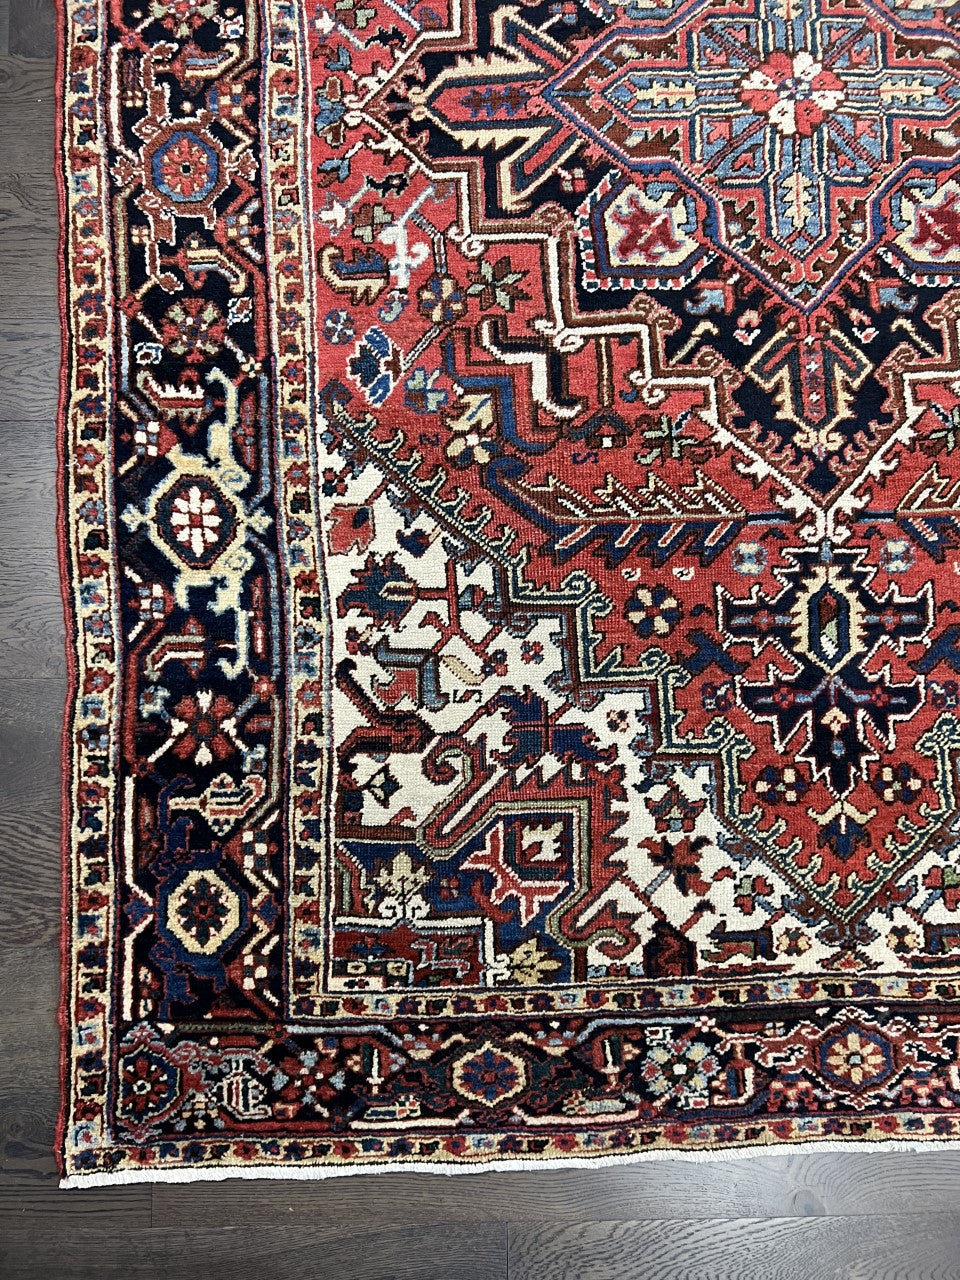 Amazing old antique handmade decorative Heriz rug